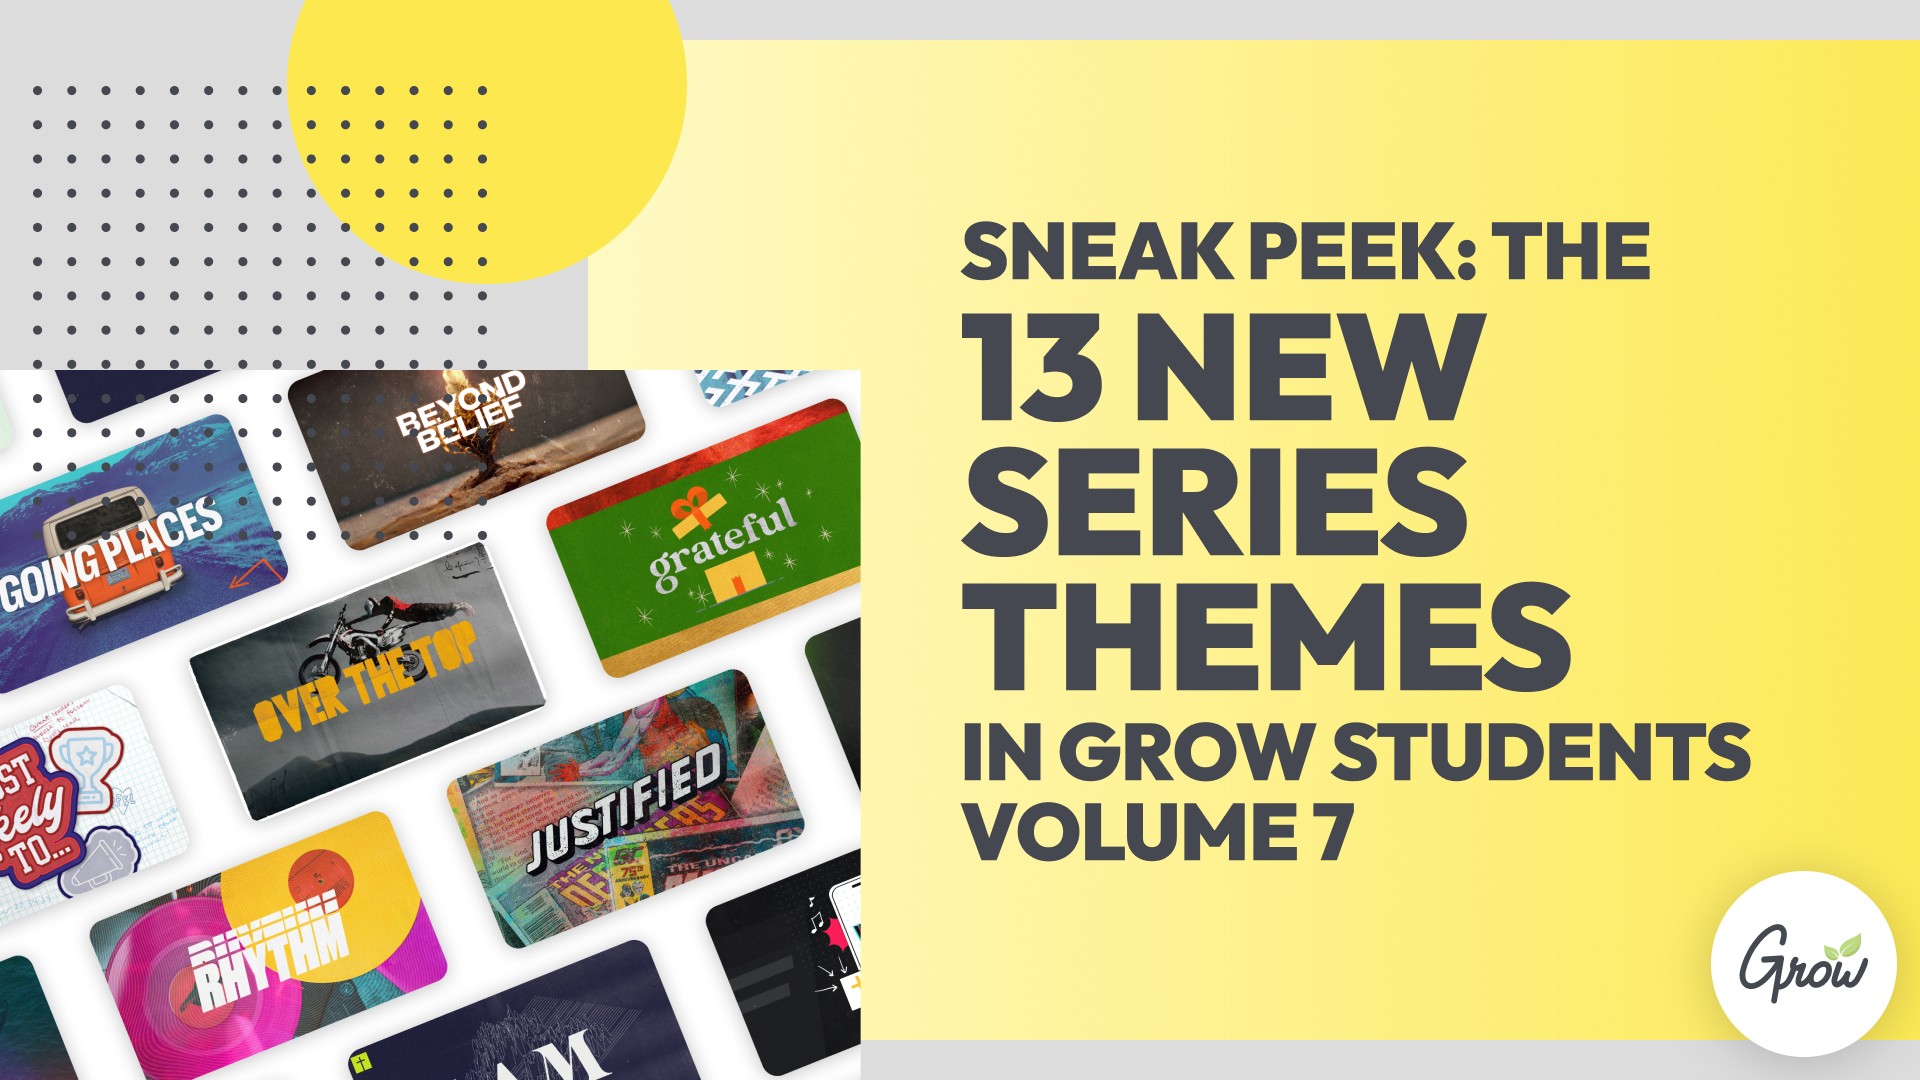 Sneak Peek: The 13 New Series Themes in Grow Students Volume 7